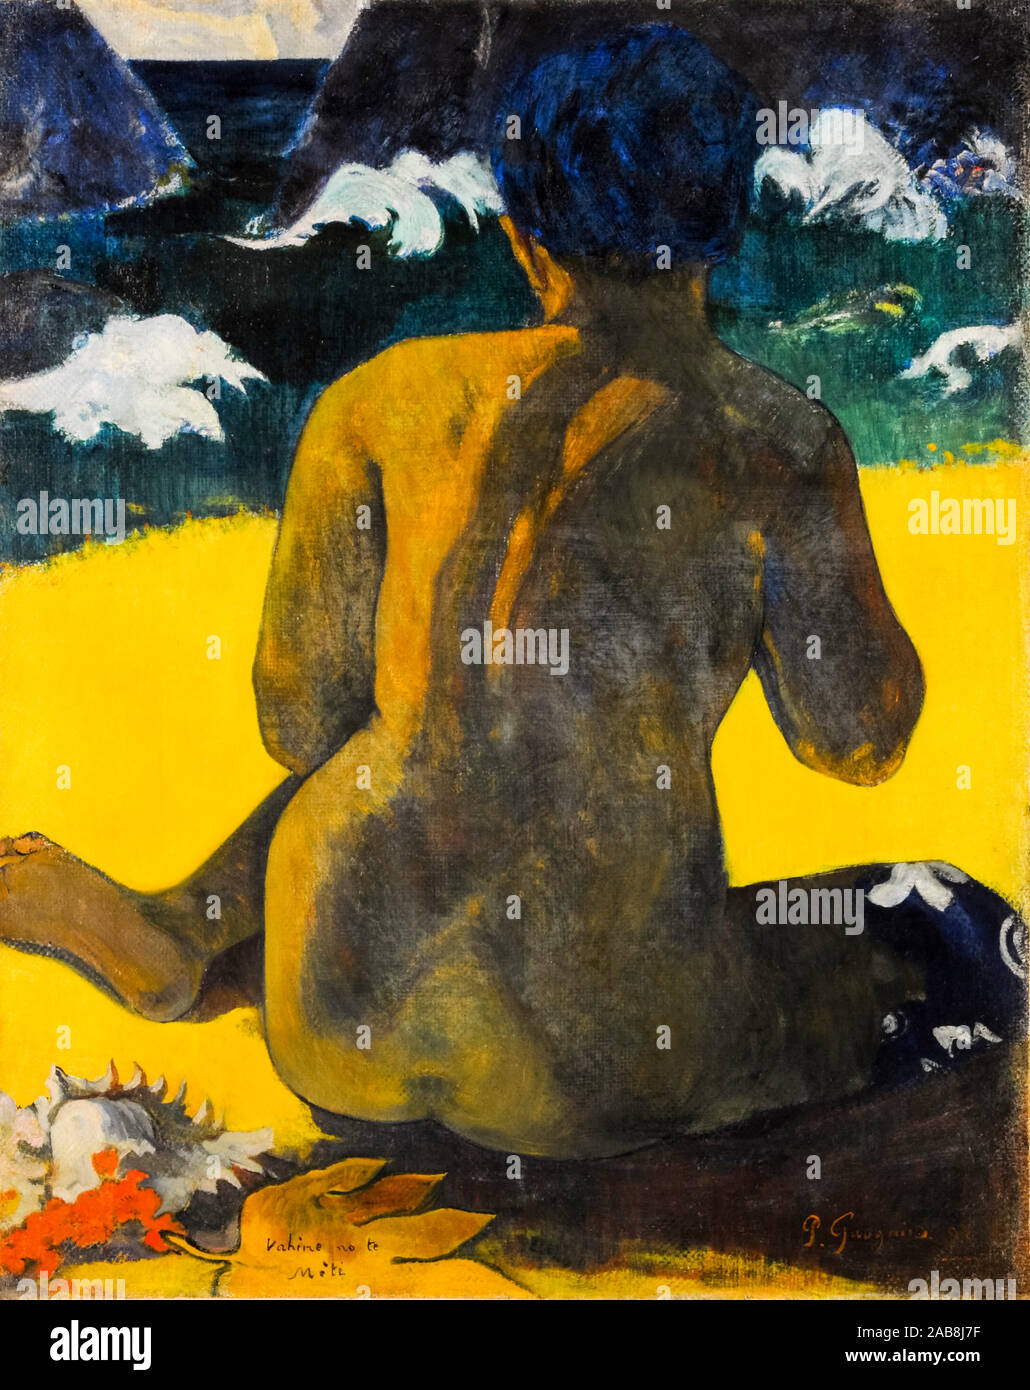 Paul Gauguin, Vahine no te miti, (Woman at the beach), painting, 1892 Stock Photo